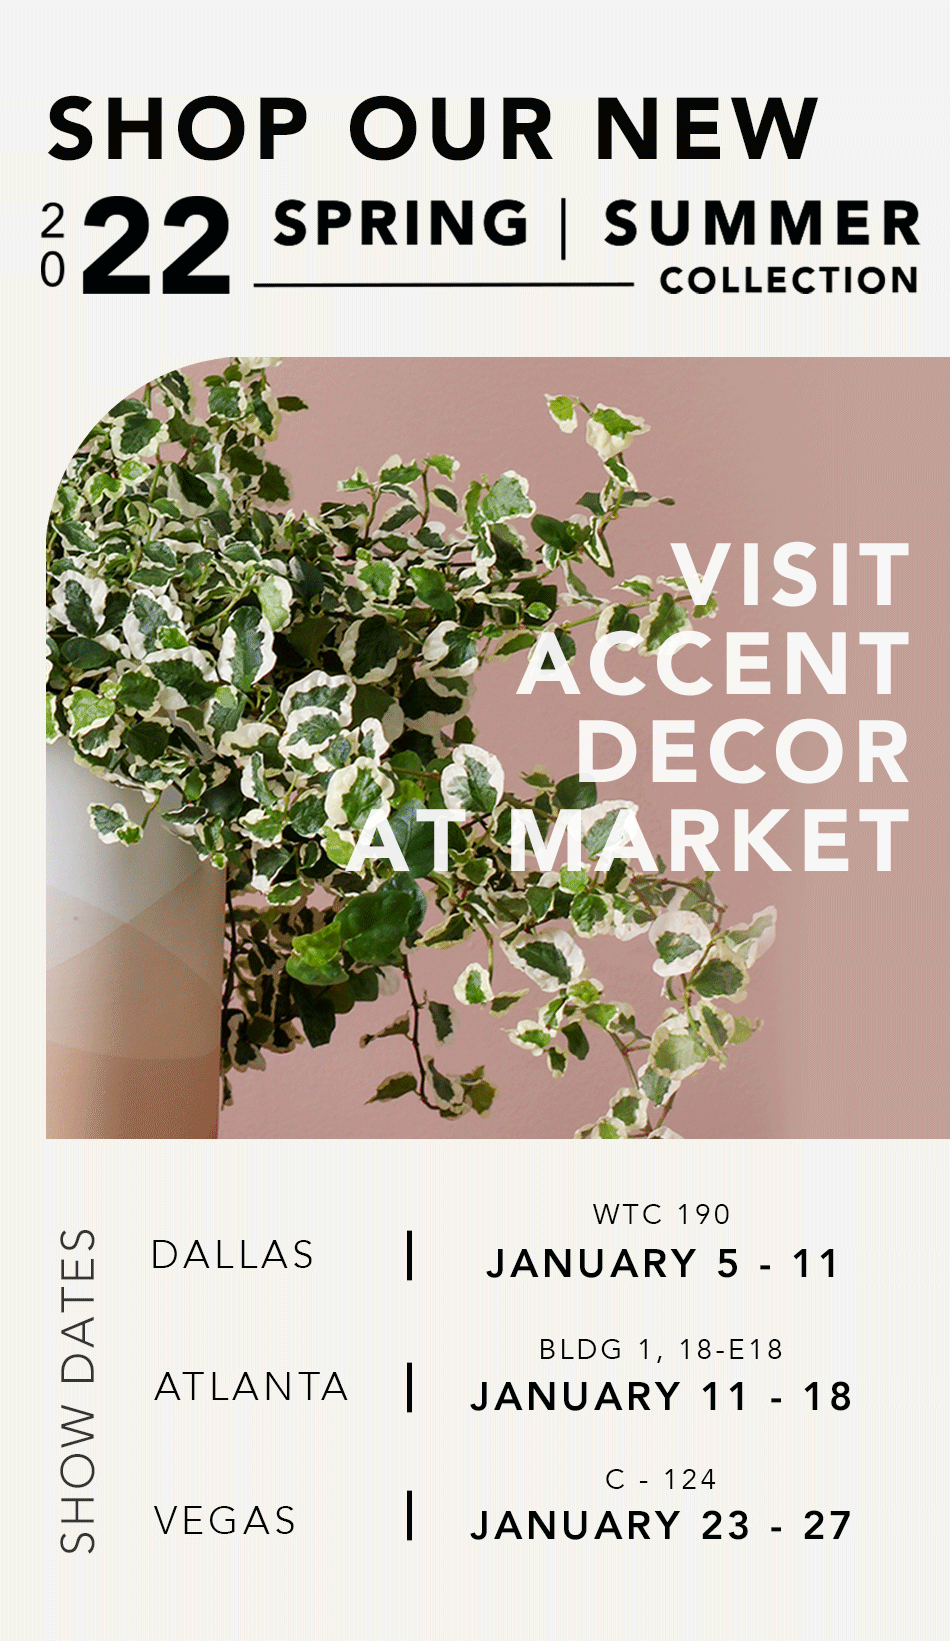 Visit Accent Decor At Market | Atlanta: Jan 5 - 11 | Dallas: Jan 11 - 18 | Vegas: Jan 23 - 27